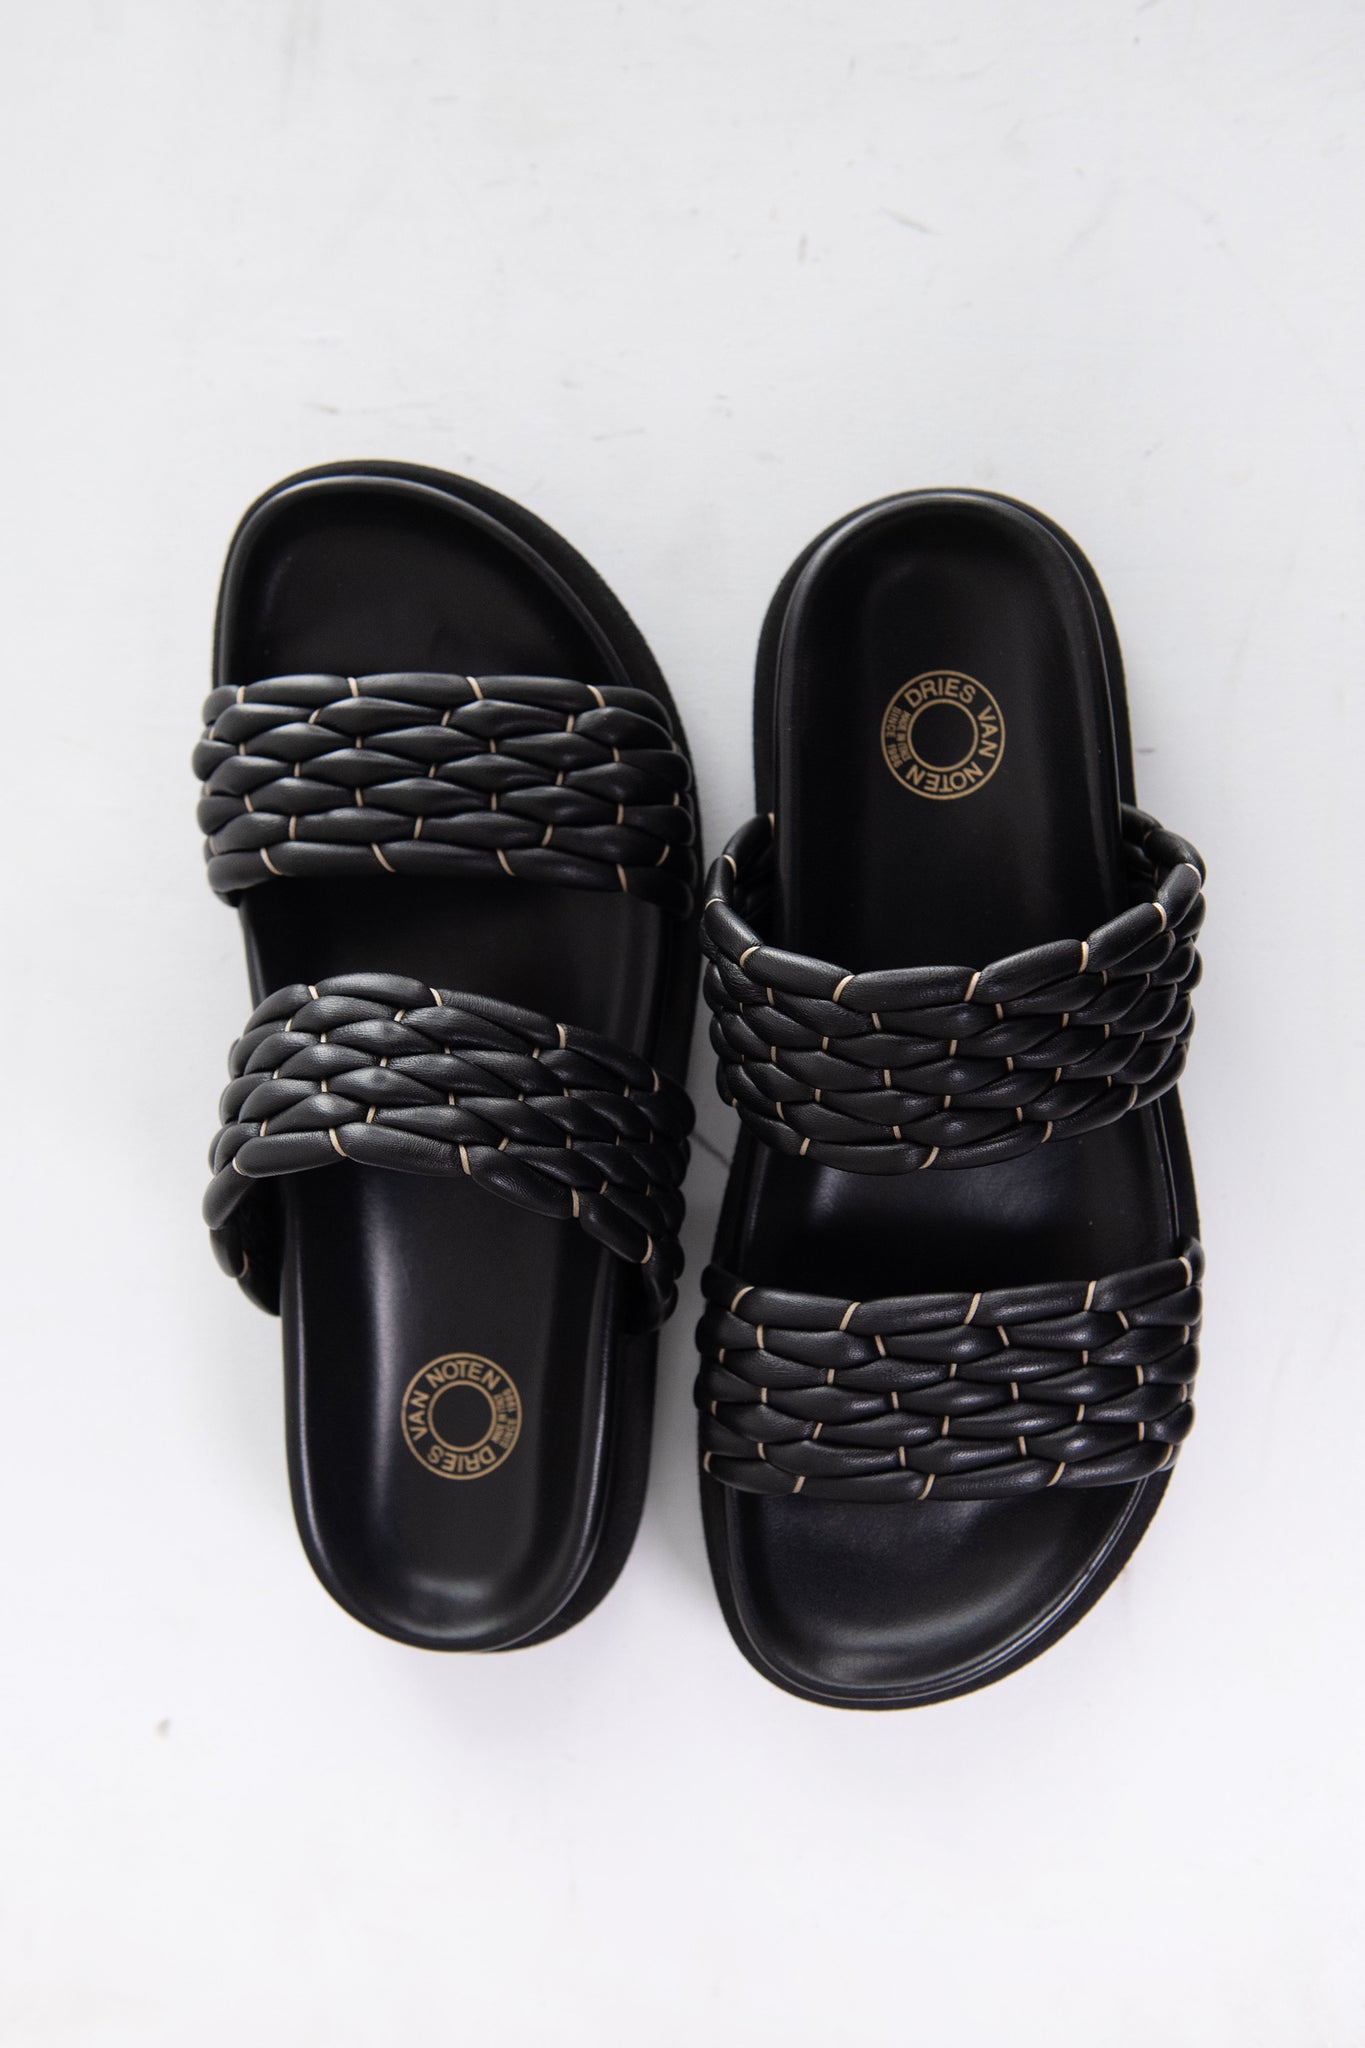 DRIES VAN NOTEN - Leather Sandal, Black